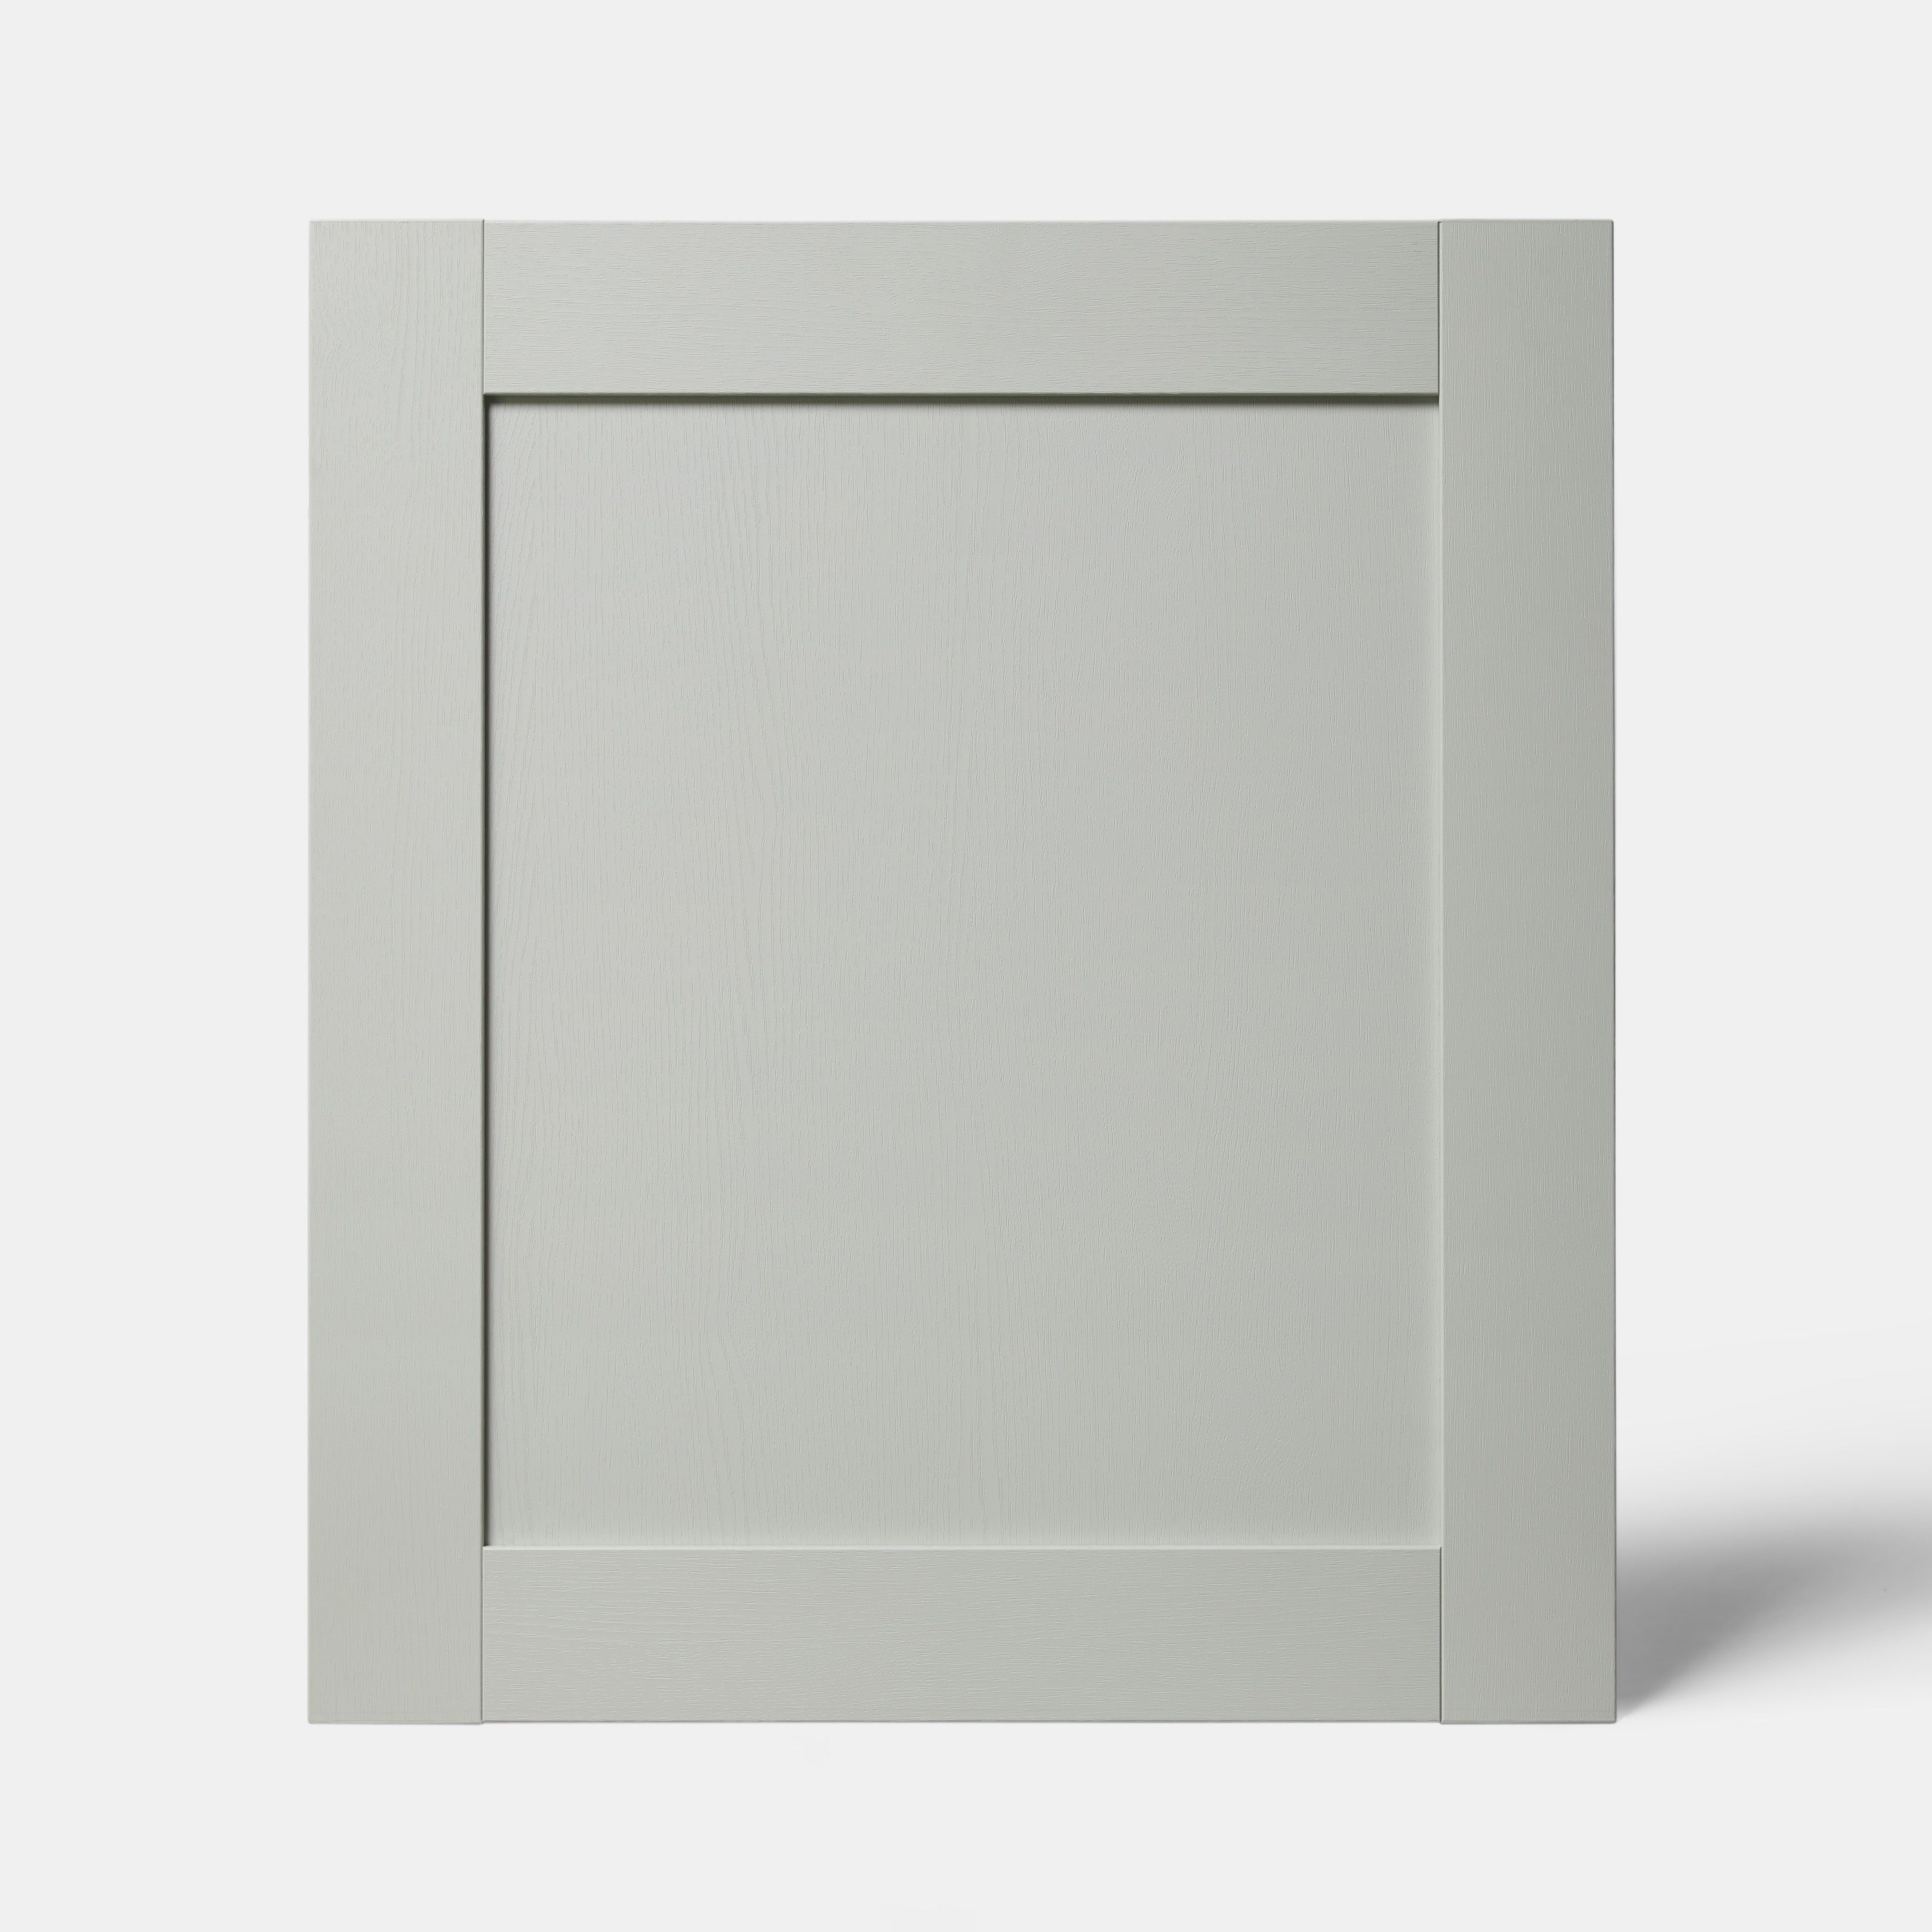 GoodHome Alpinia Matt grey painted wood effect shaker Appliance Cabinet door (W)600mm (H)687mm (T)18mm